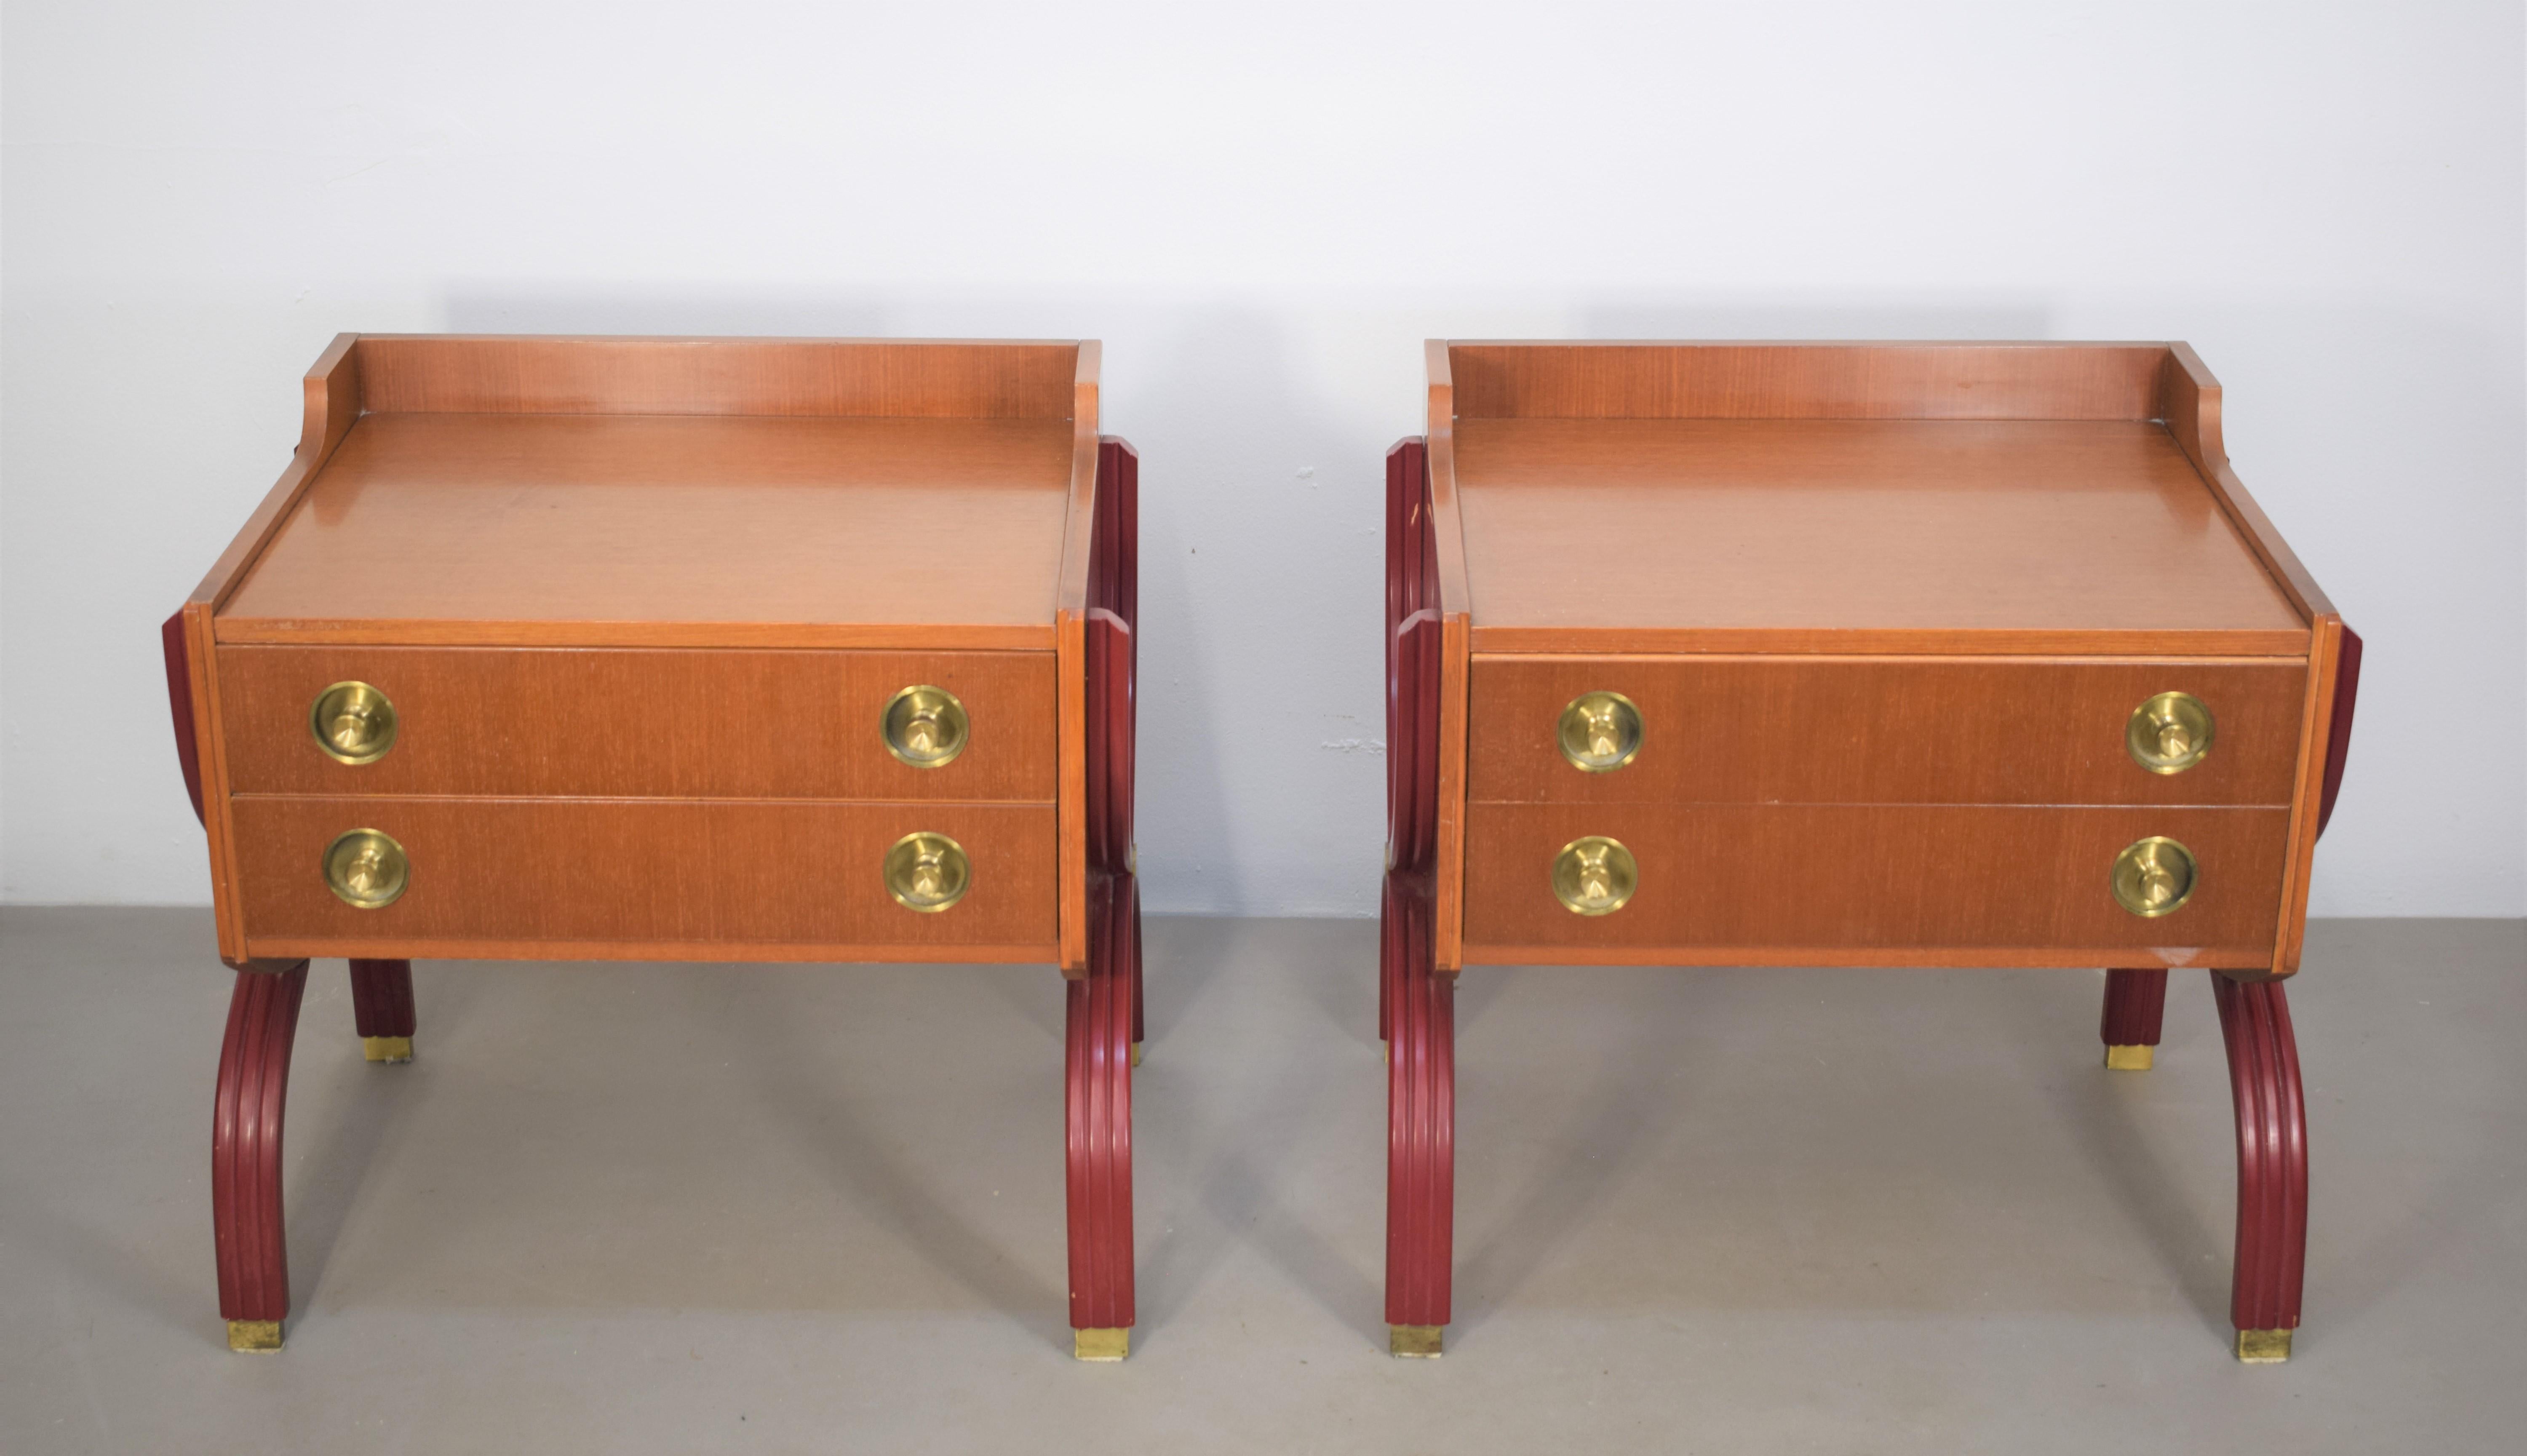 Pair of Italian nightstands, 1970s.

Dimensions: H= 54 cm; W= 55 cm; D= 42 cm.